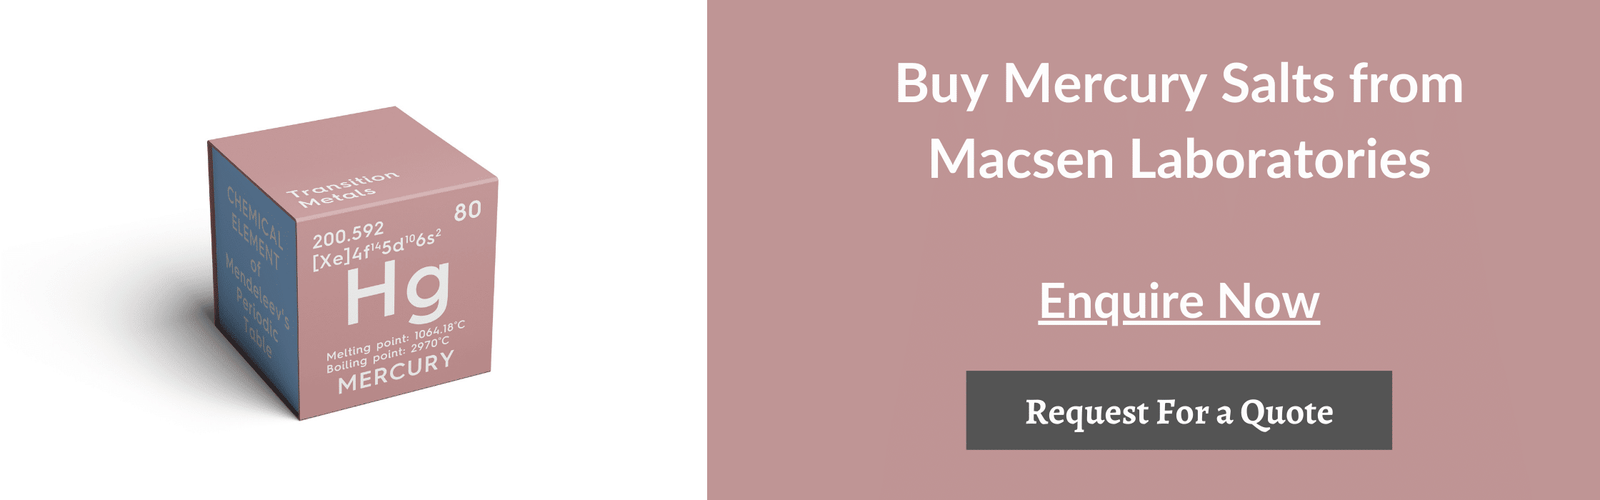 Buy Mercury Salts from Macsen Laboratories